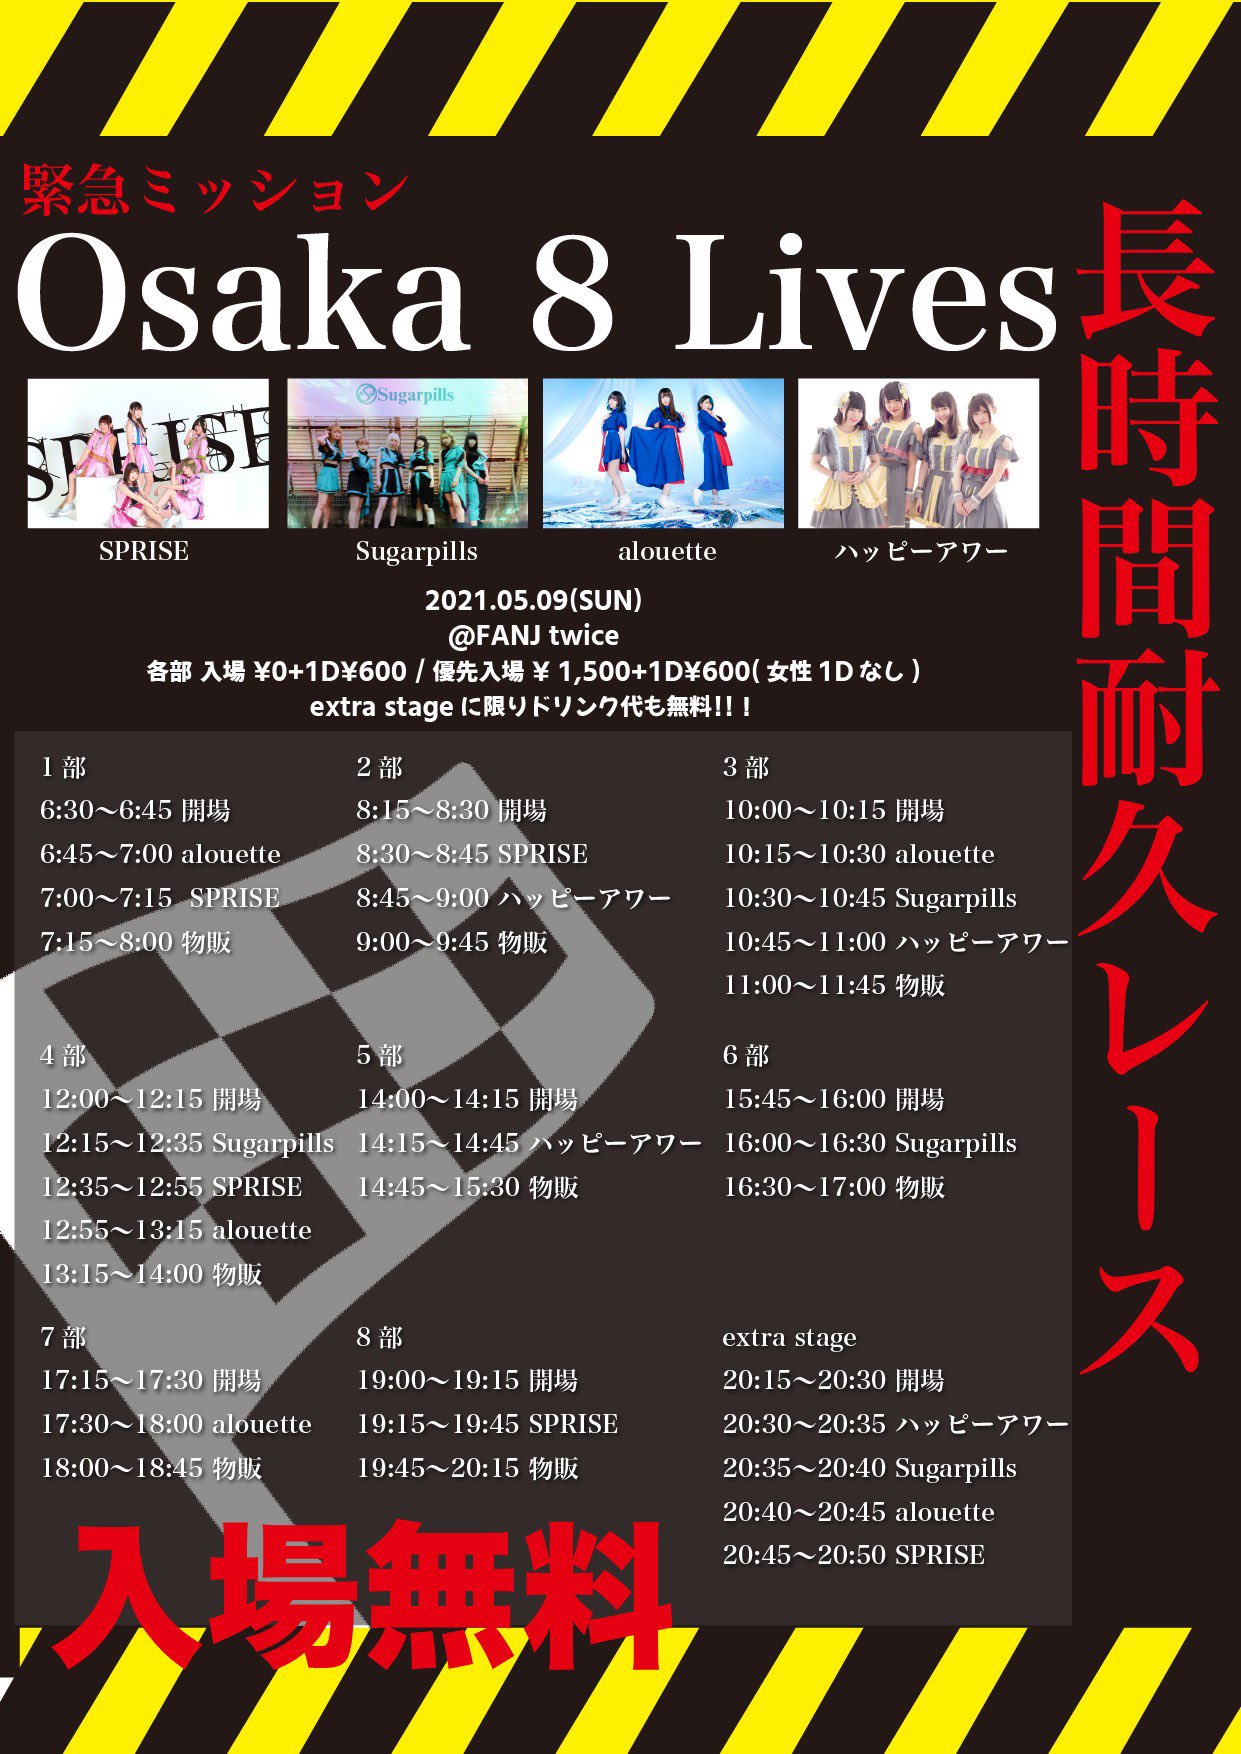 Osaka 8 Lives -長時間耐久レース-